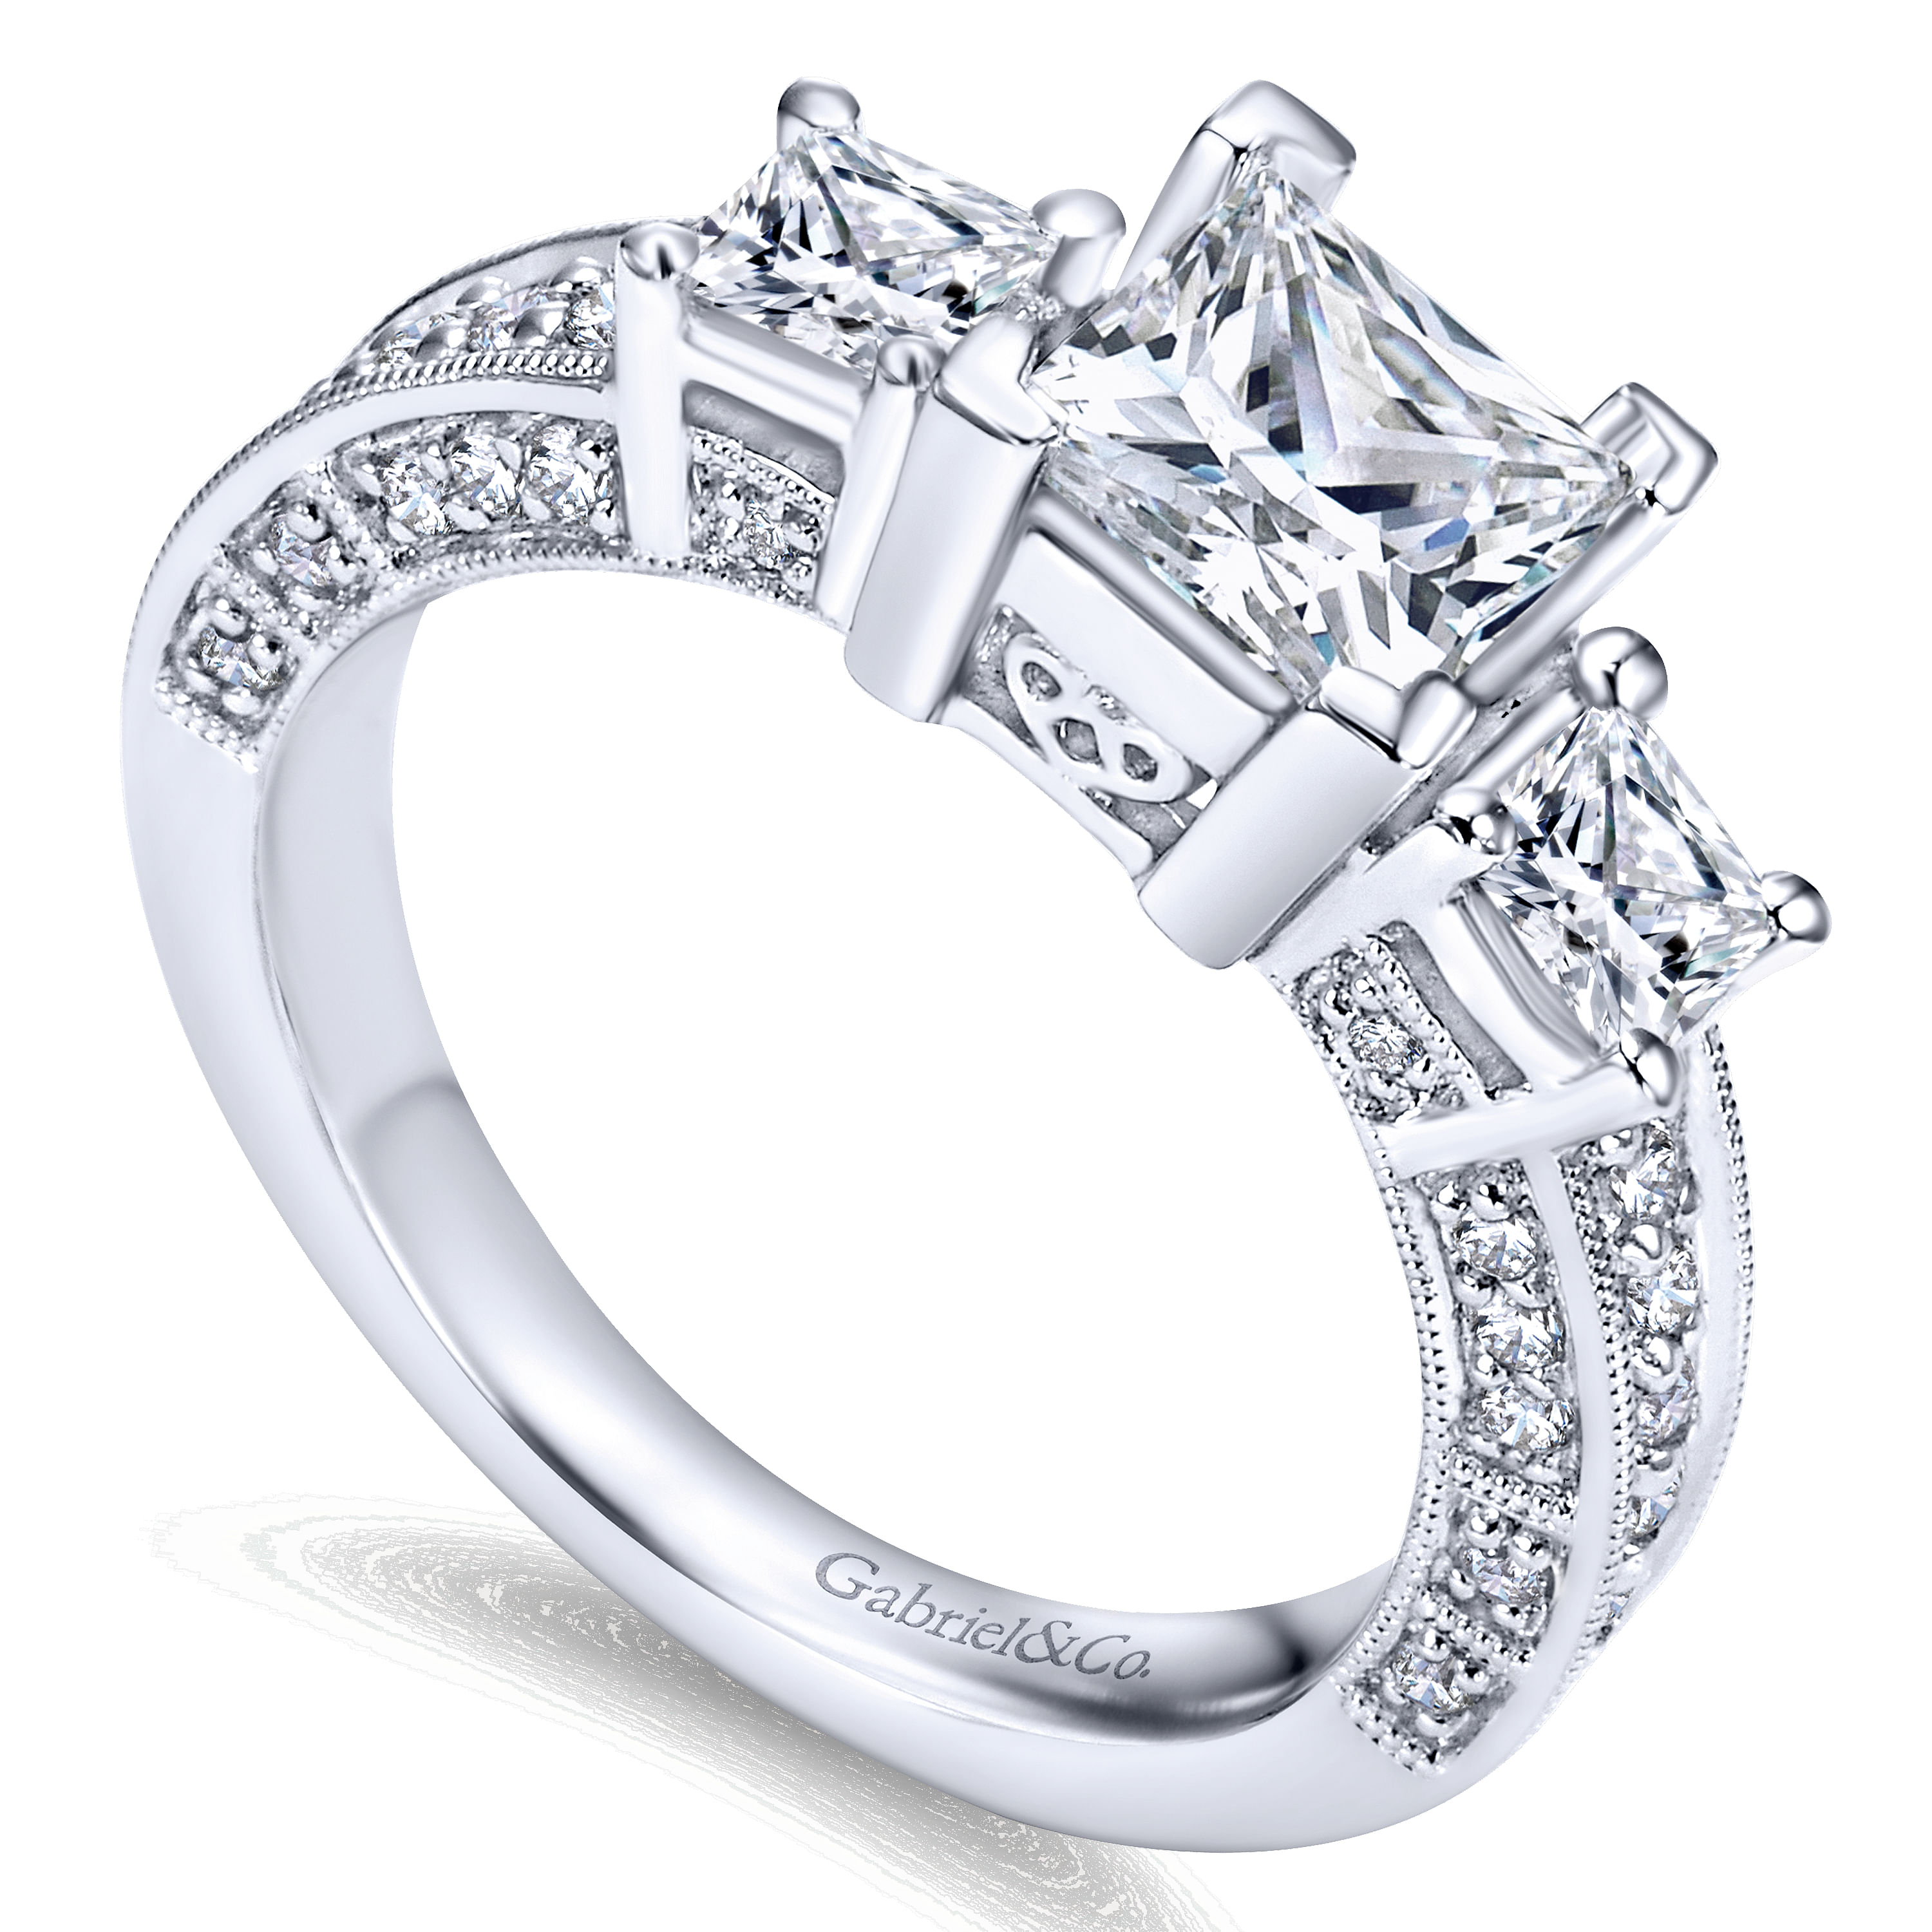 Vintage Inspired 14K White Gold Princess Cut Three Stone Diamond Engagement Ring